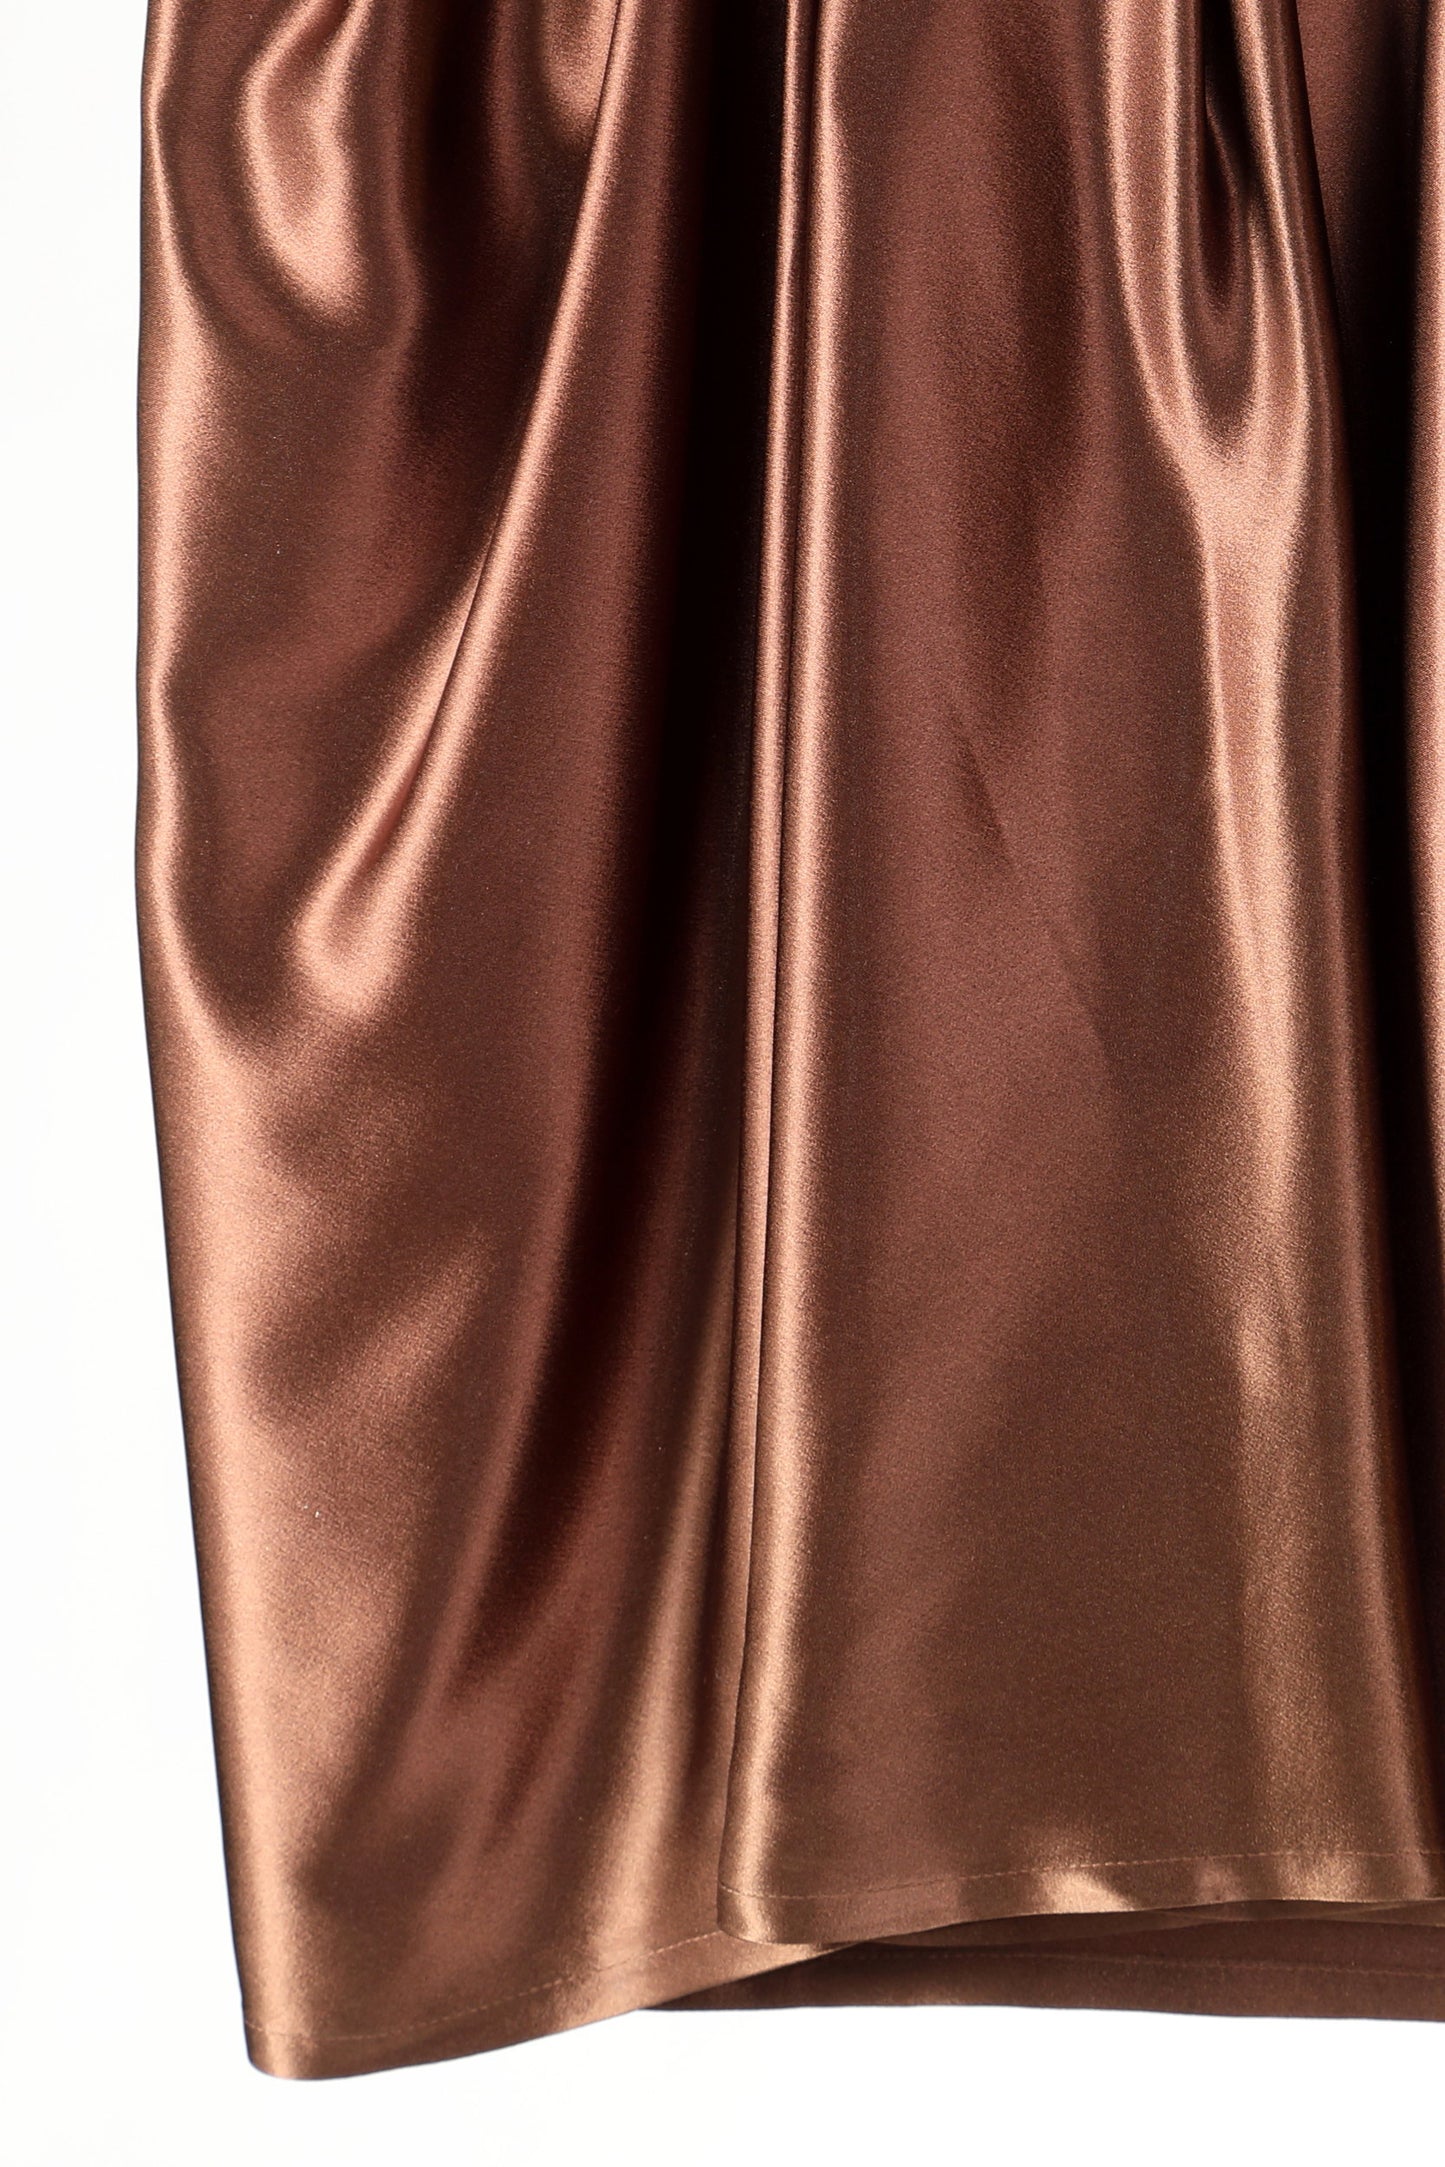 Yves Saint Lauren Rive Gauche Bronze Skirt